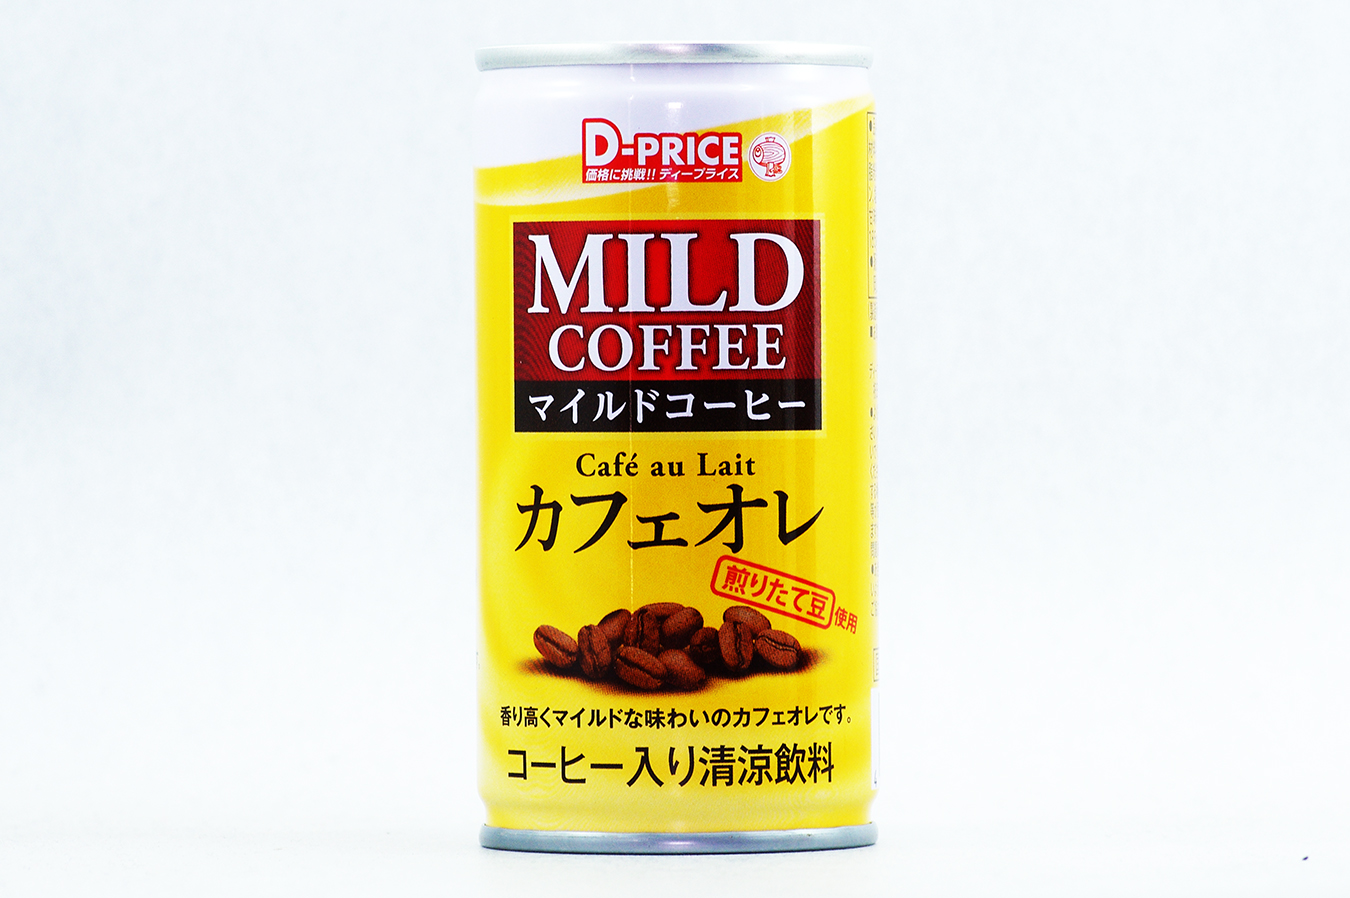 D-PRICE マイルドコーヒー カフェオレ 2017年11月